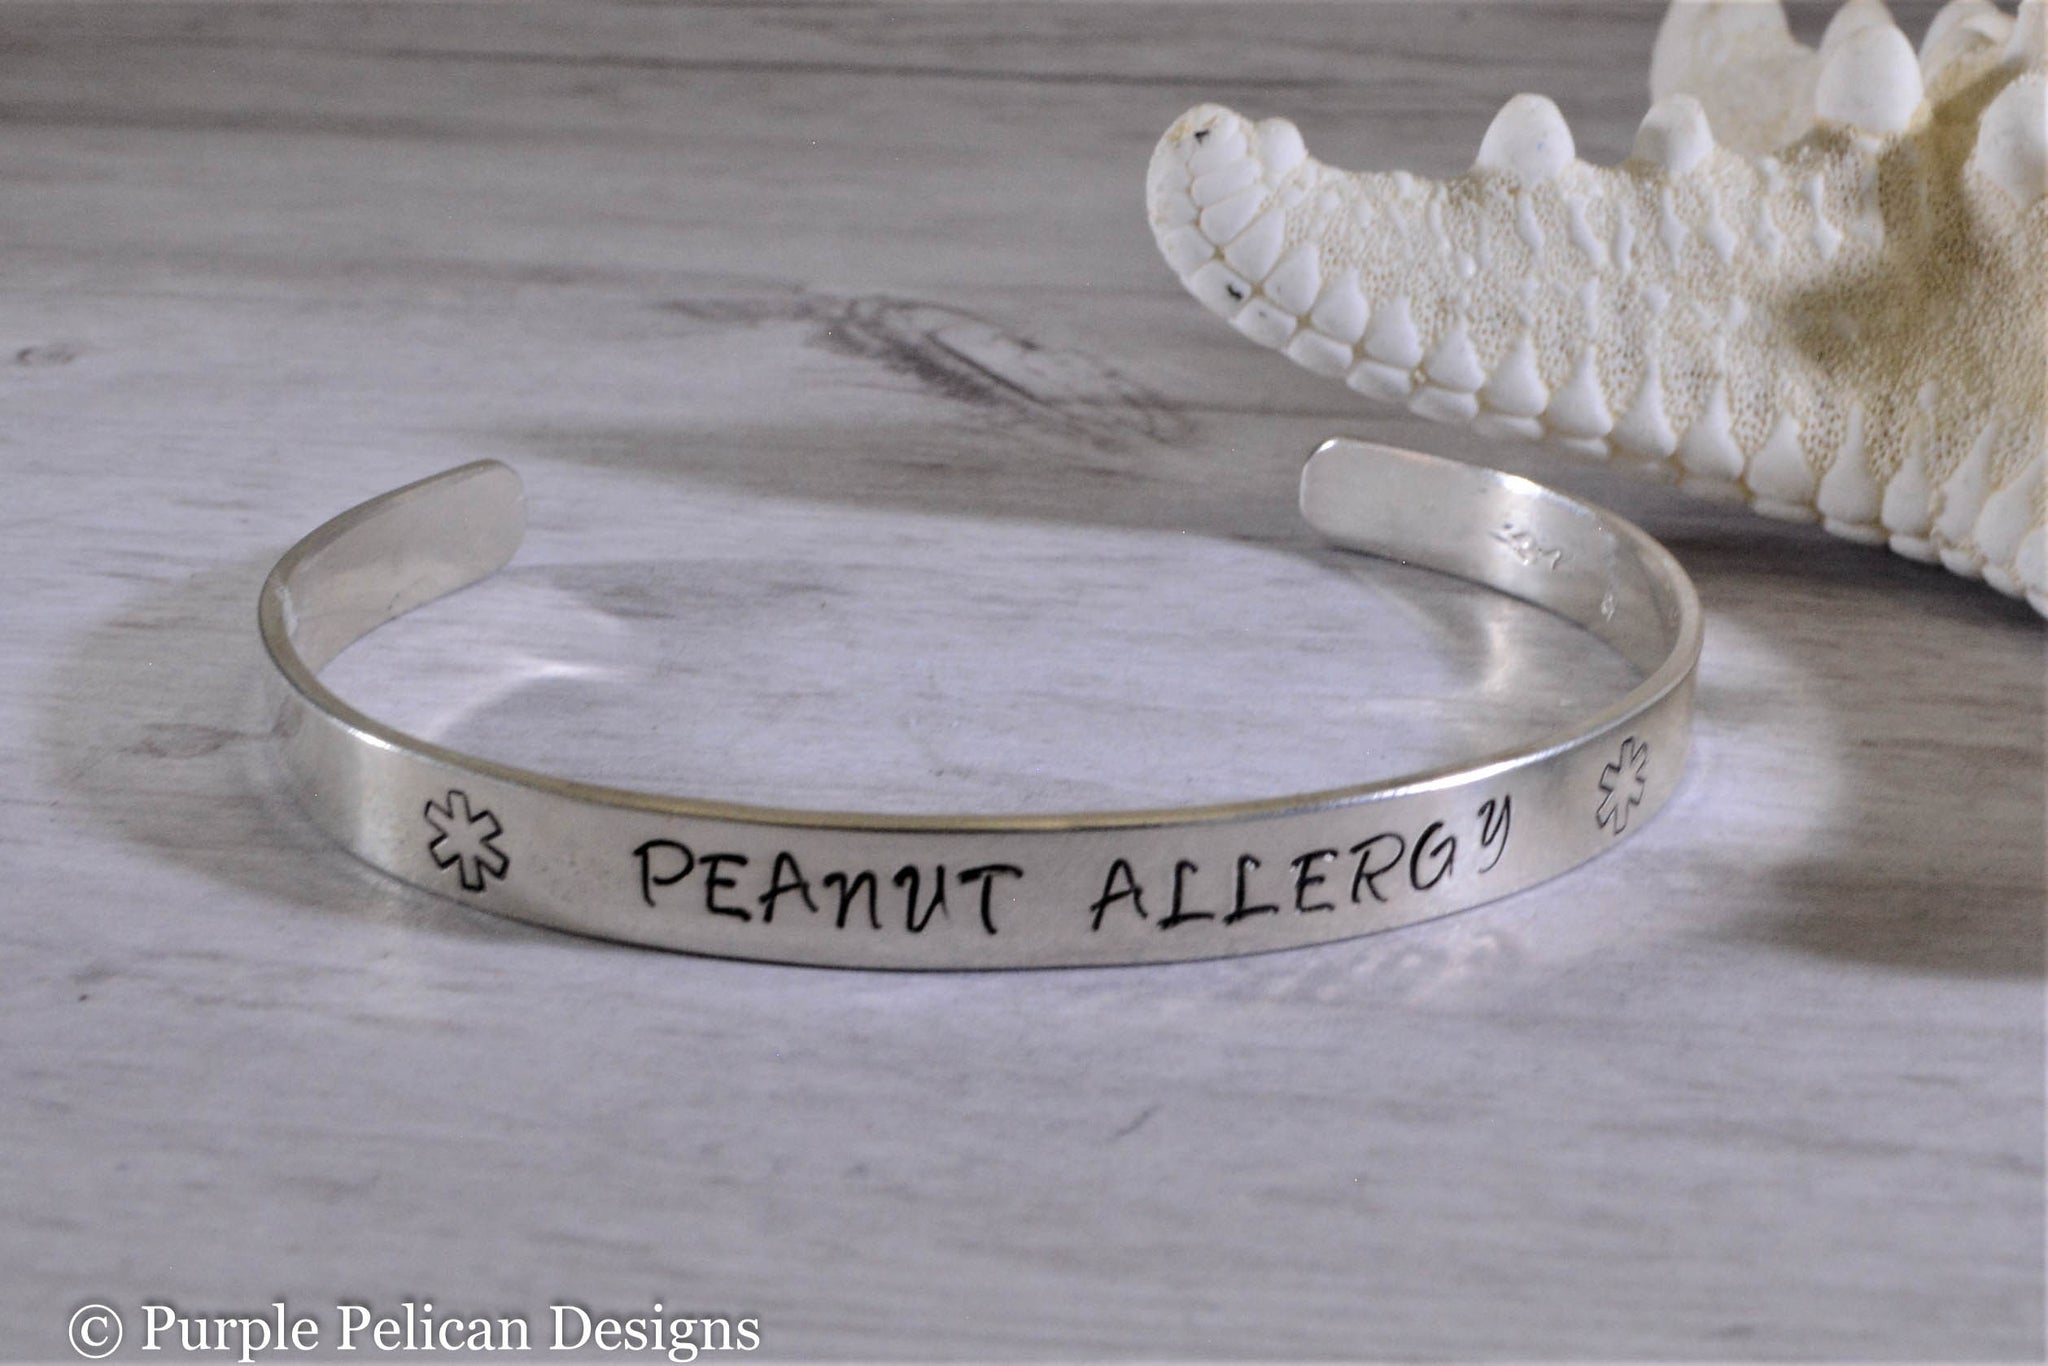 Update more than 150 medical allergy bracelet